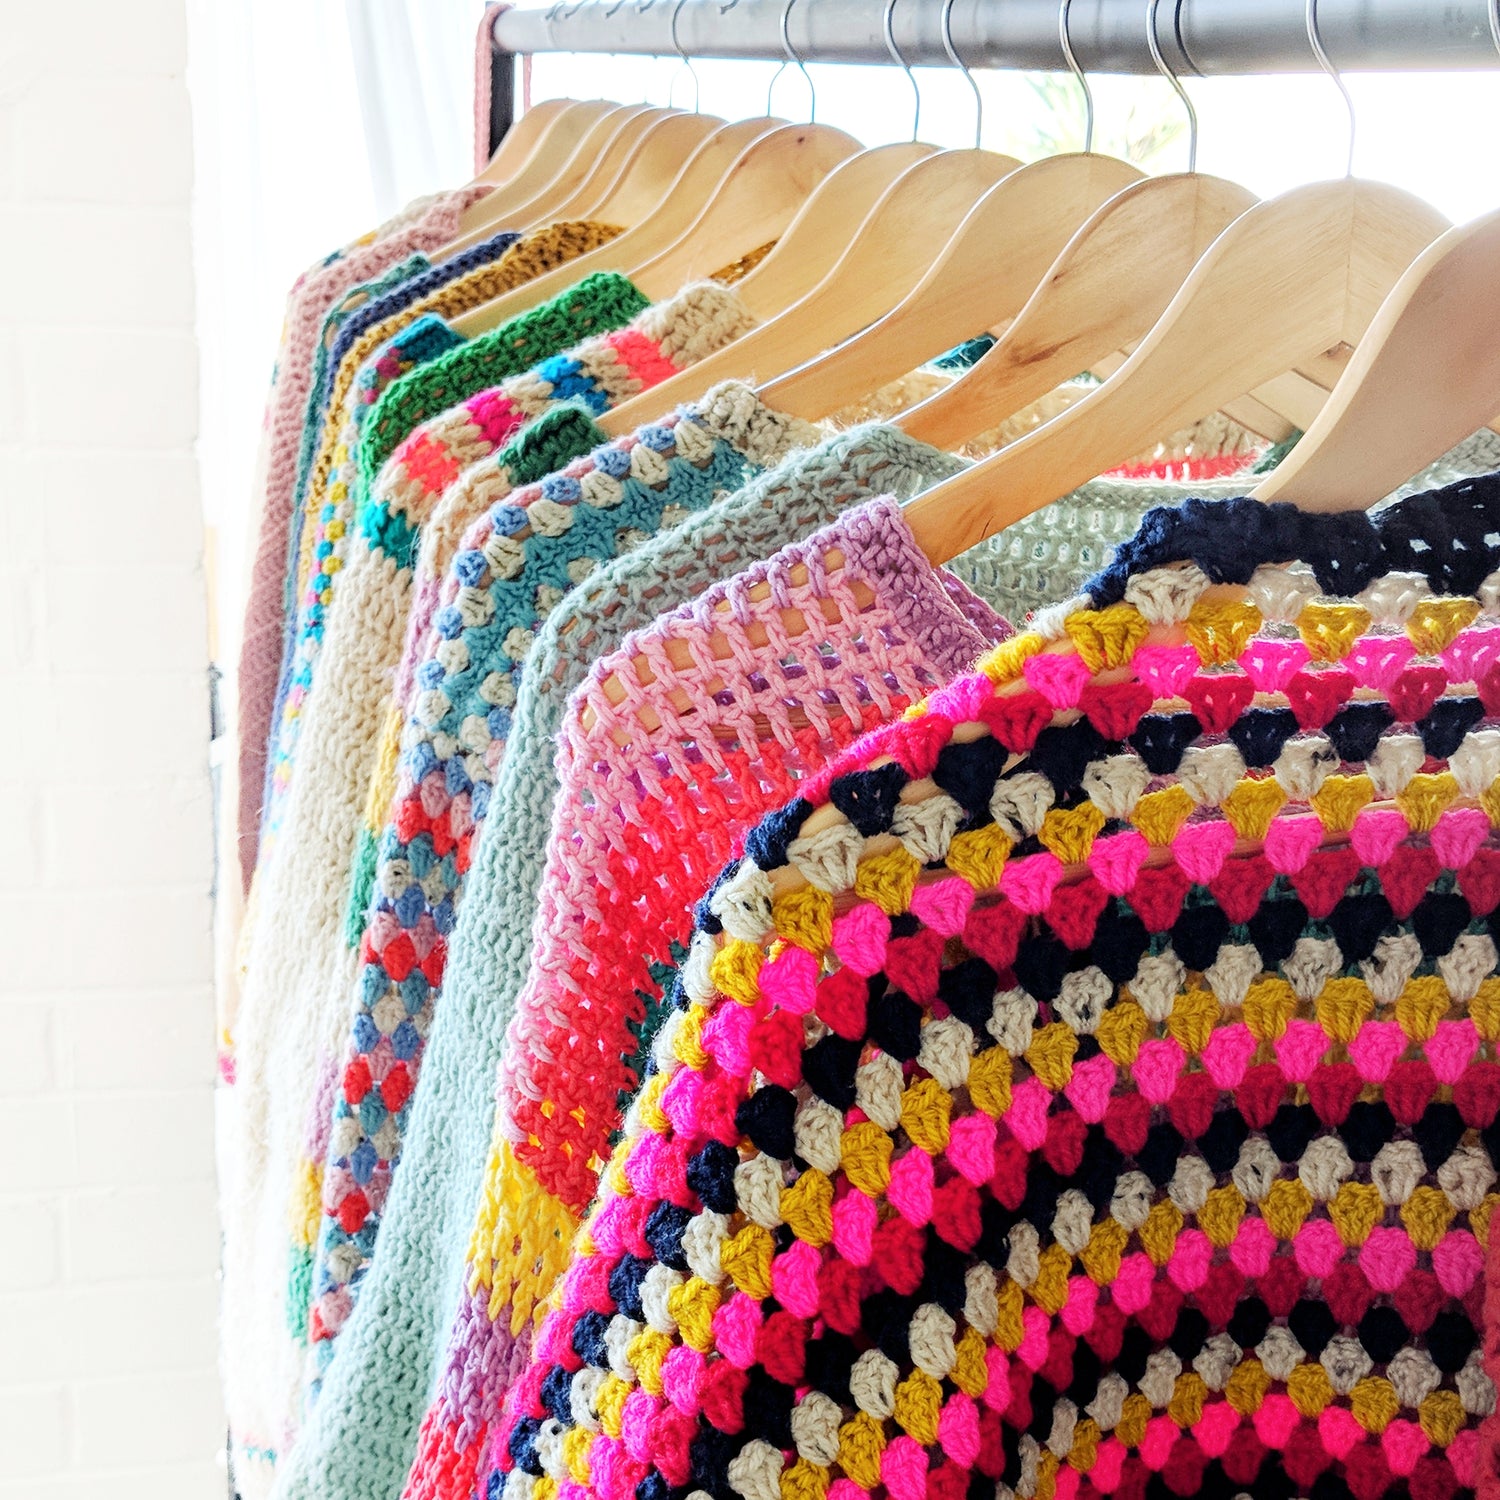 Crochet garments on rail